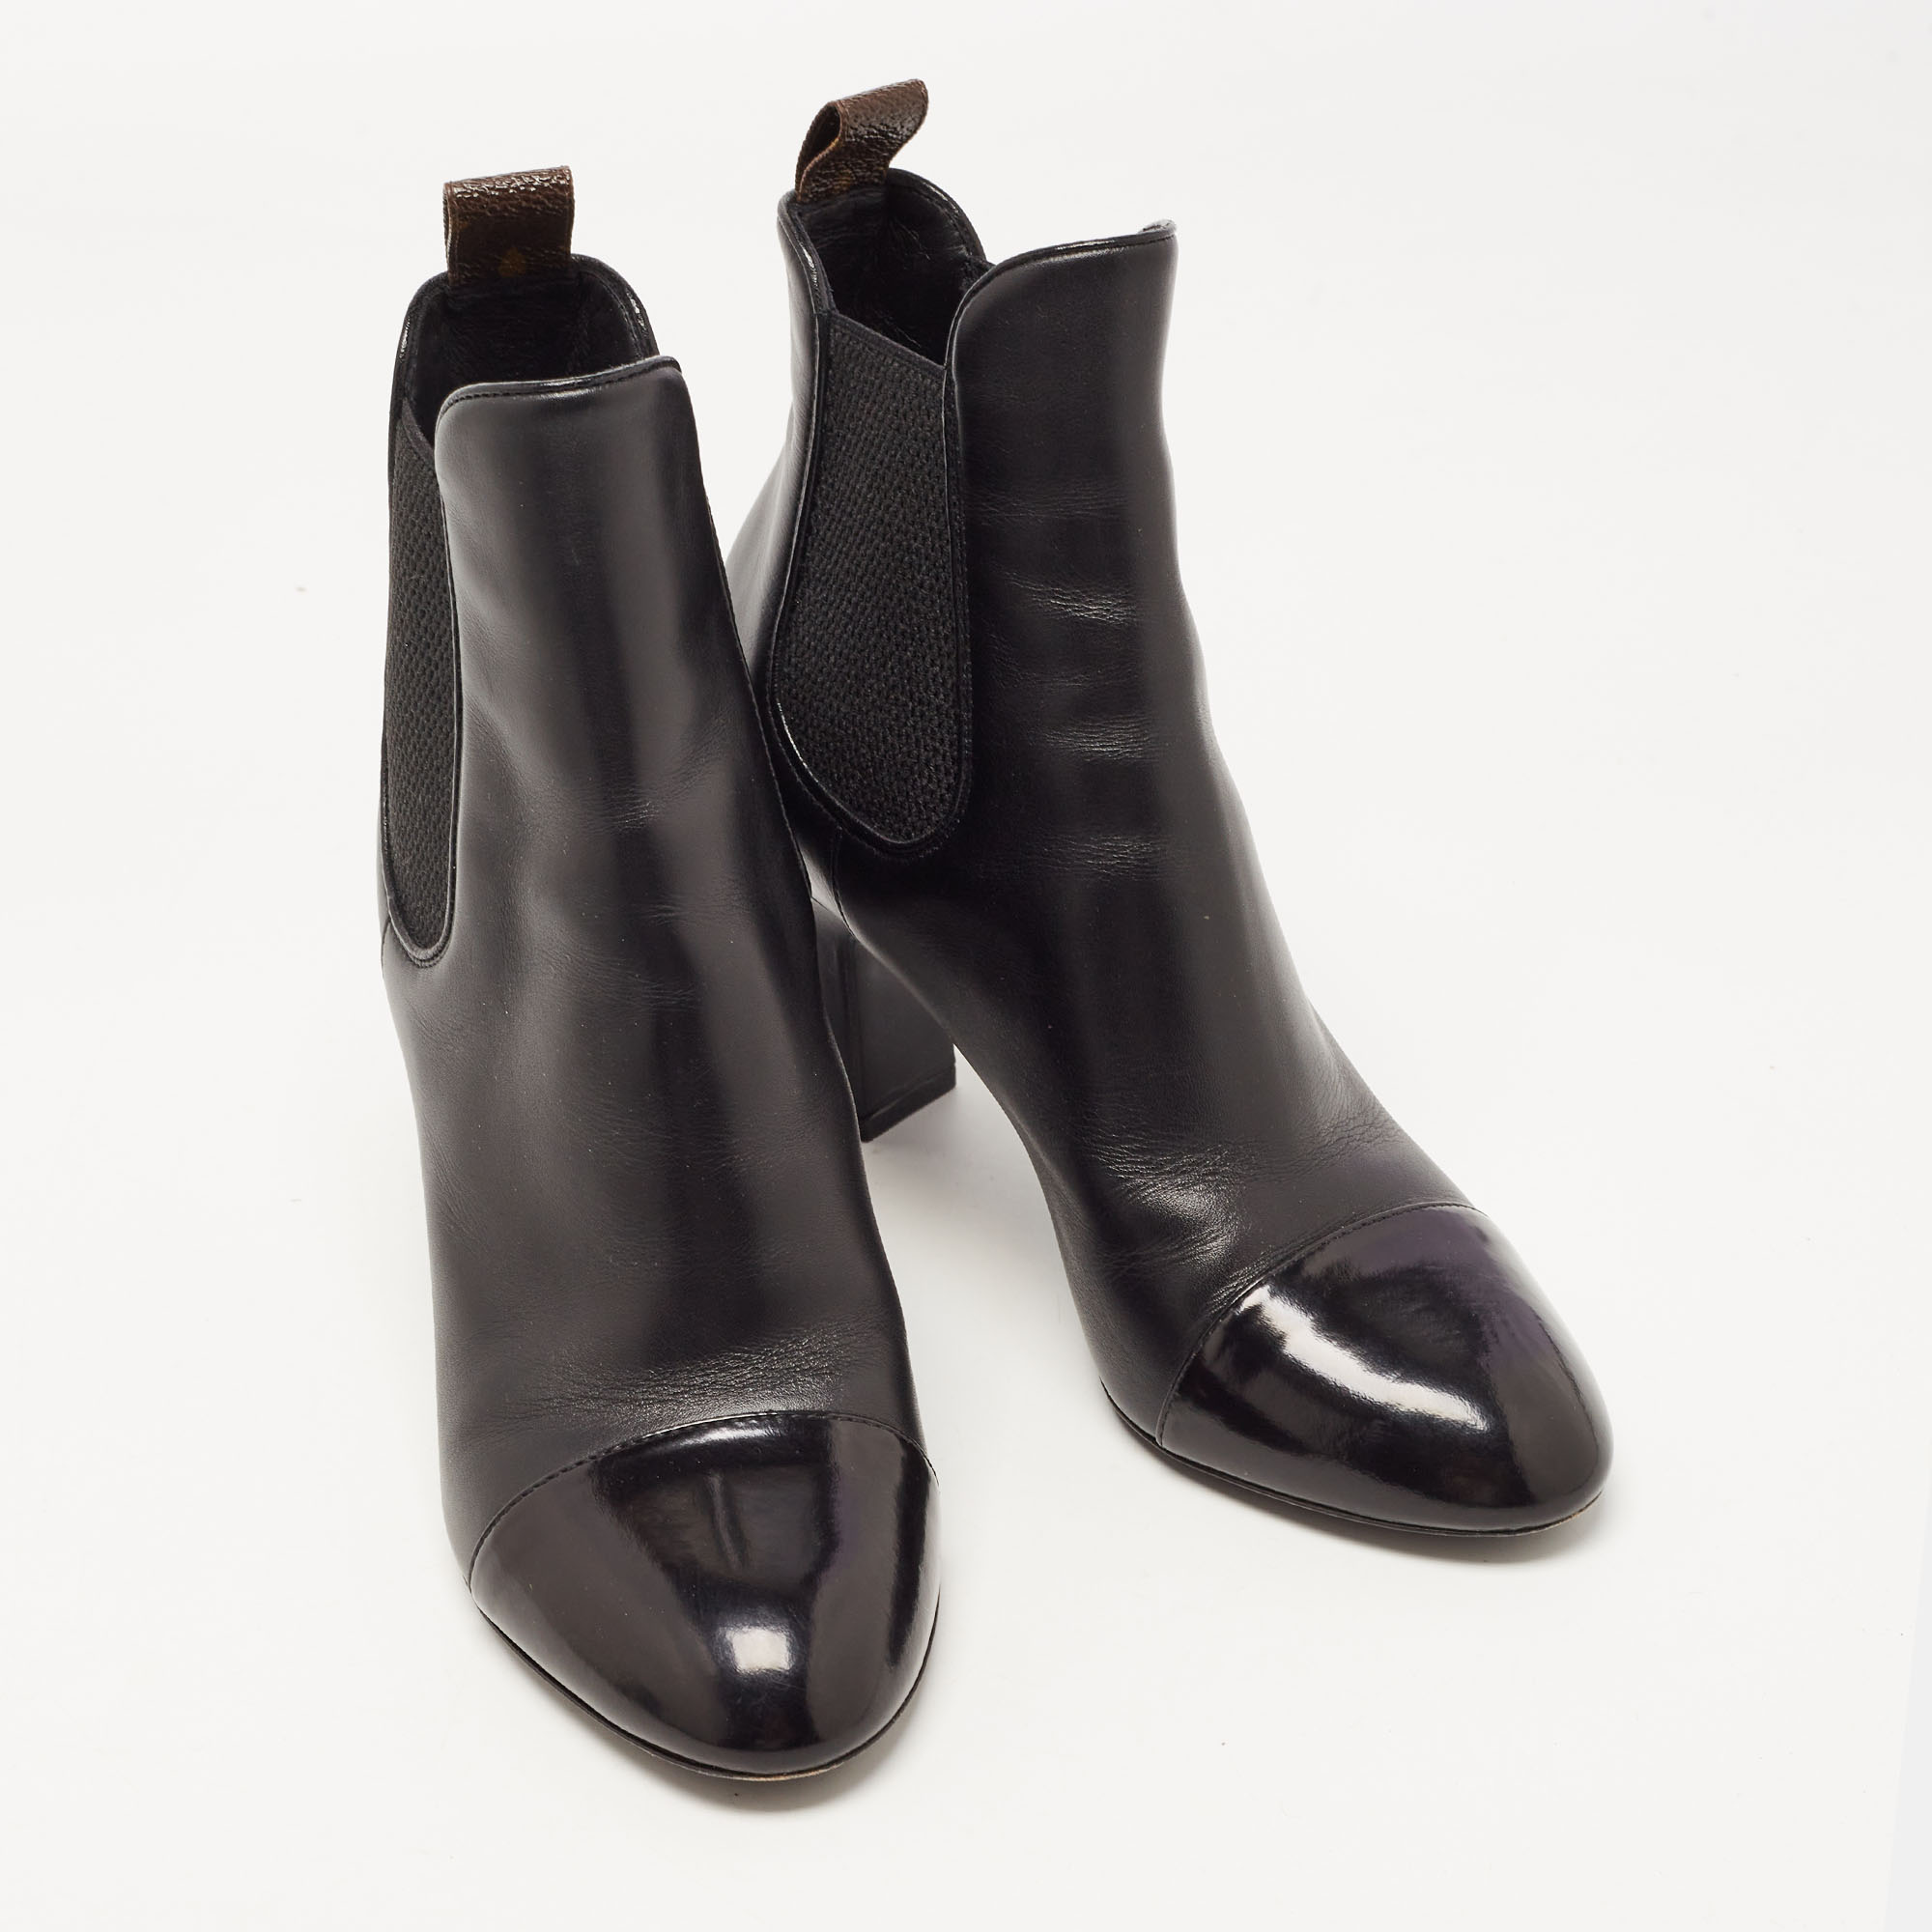 Louis Vuitton Black Leather Ankle Boots Size 35